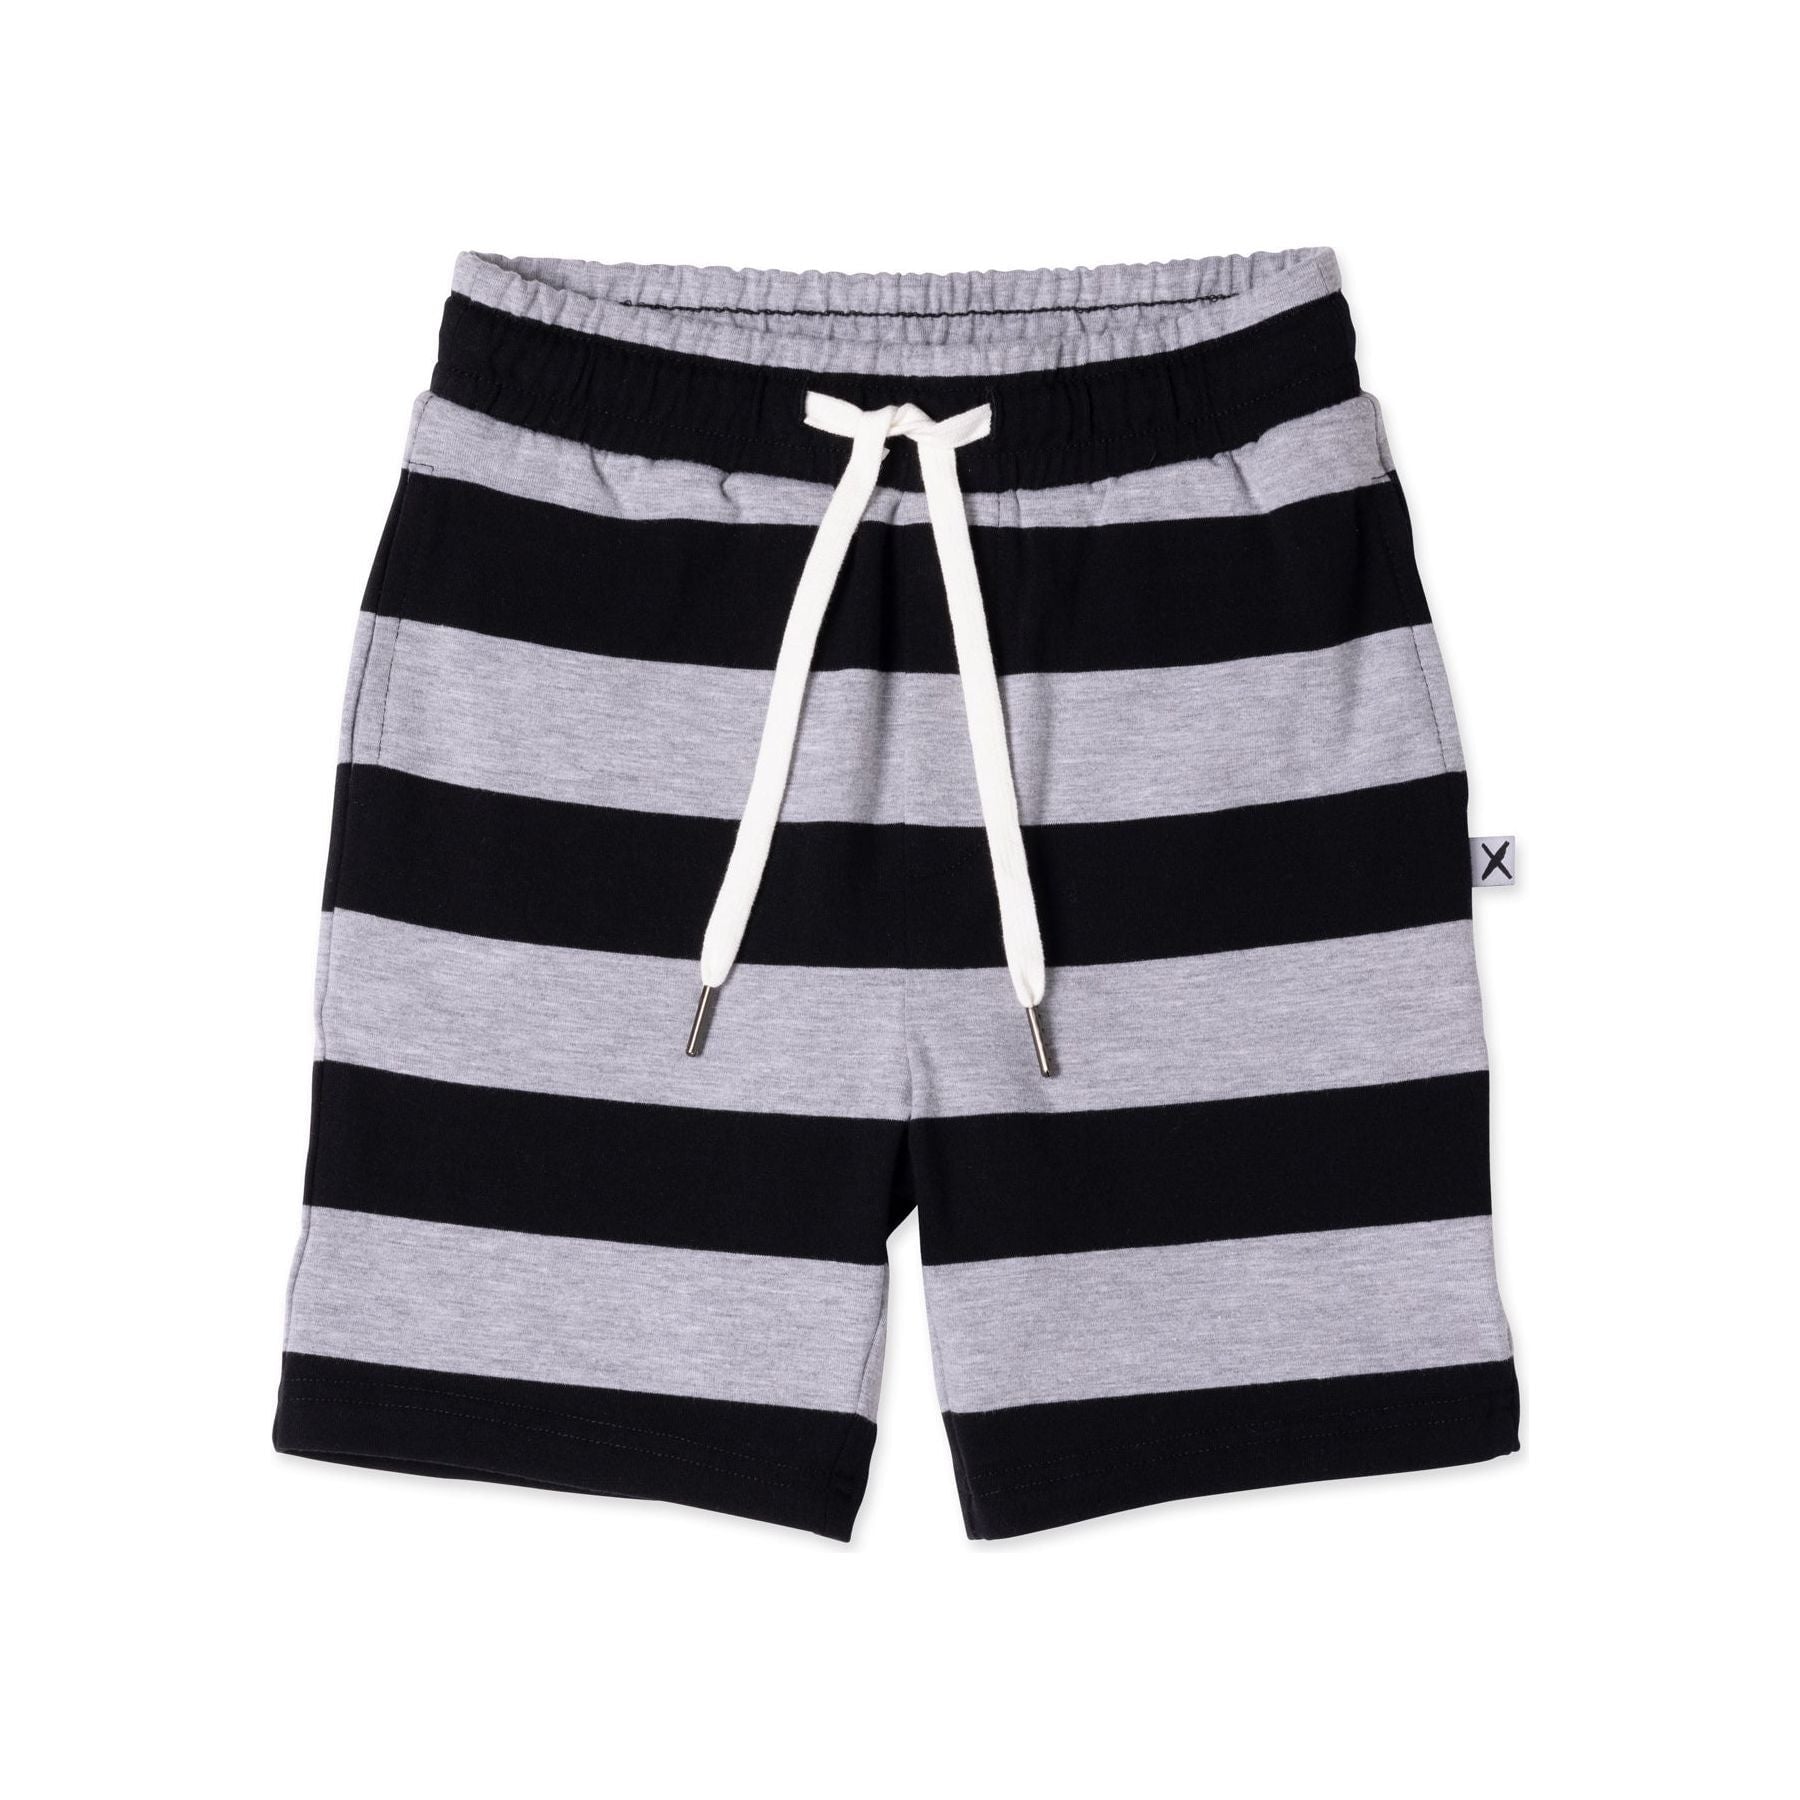 Duo Short- Black/Grey Marle Stripe